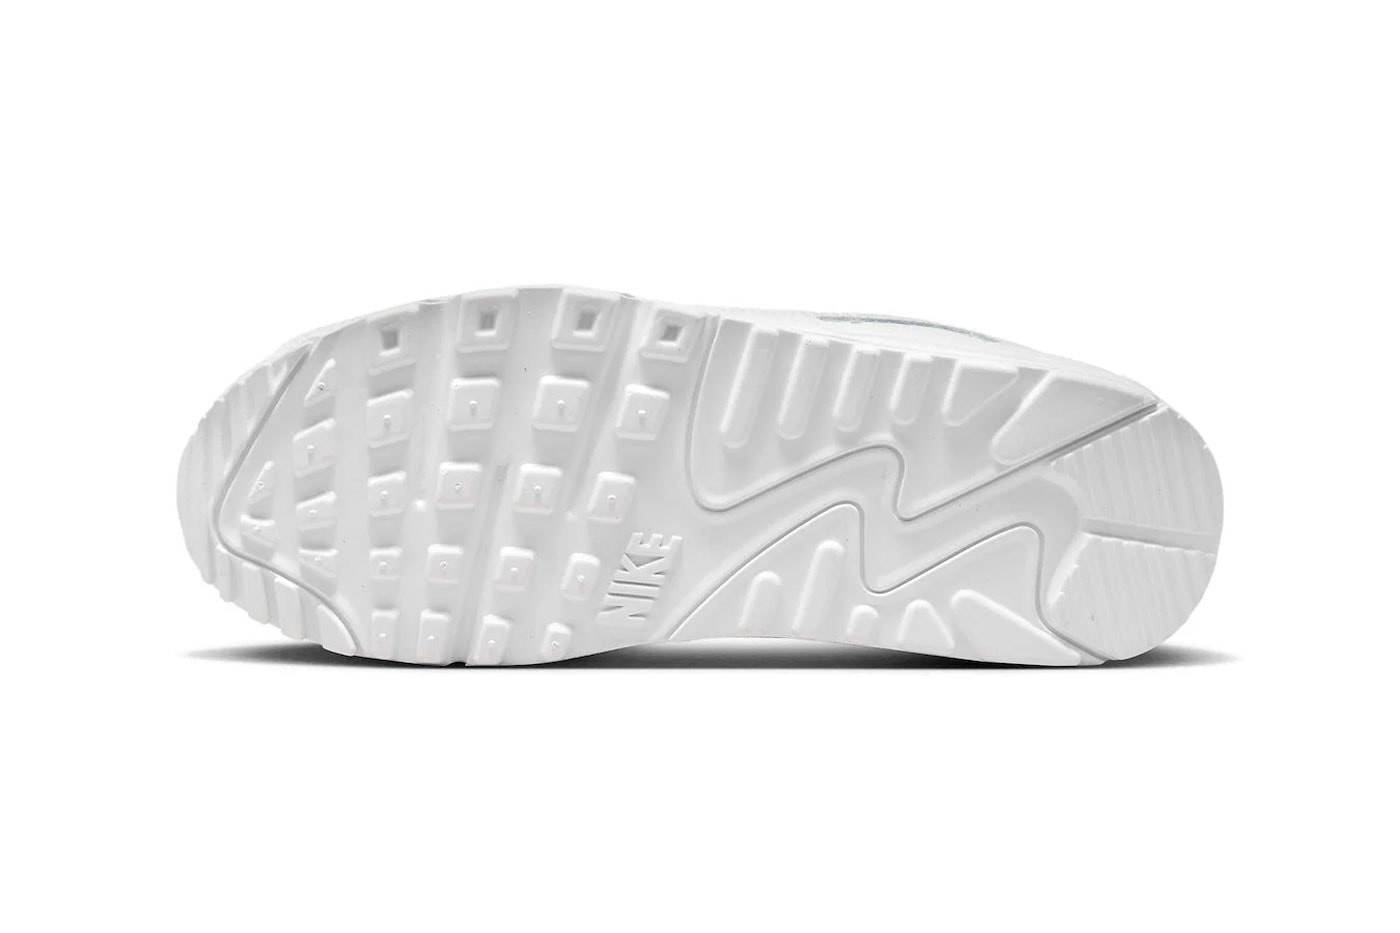 Nike Air Max 90 white reptile snakeskin black two tone release info date price